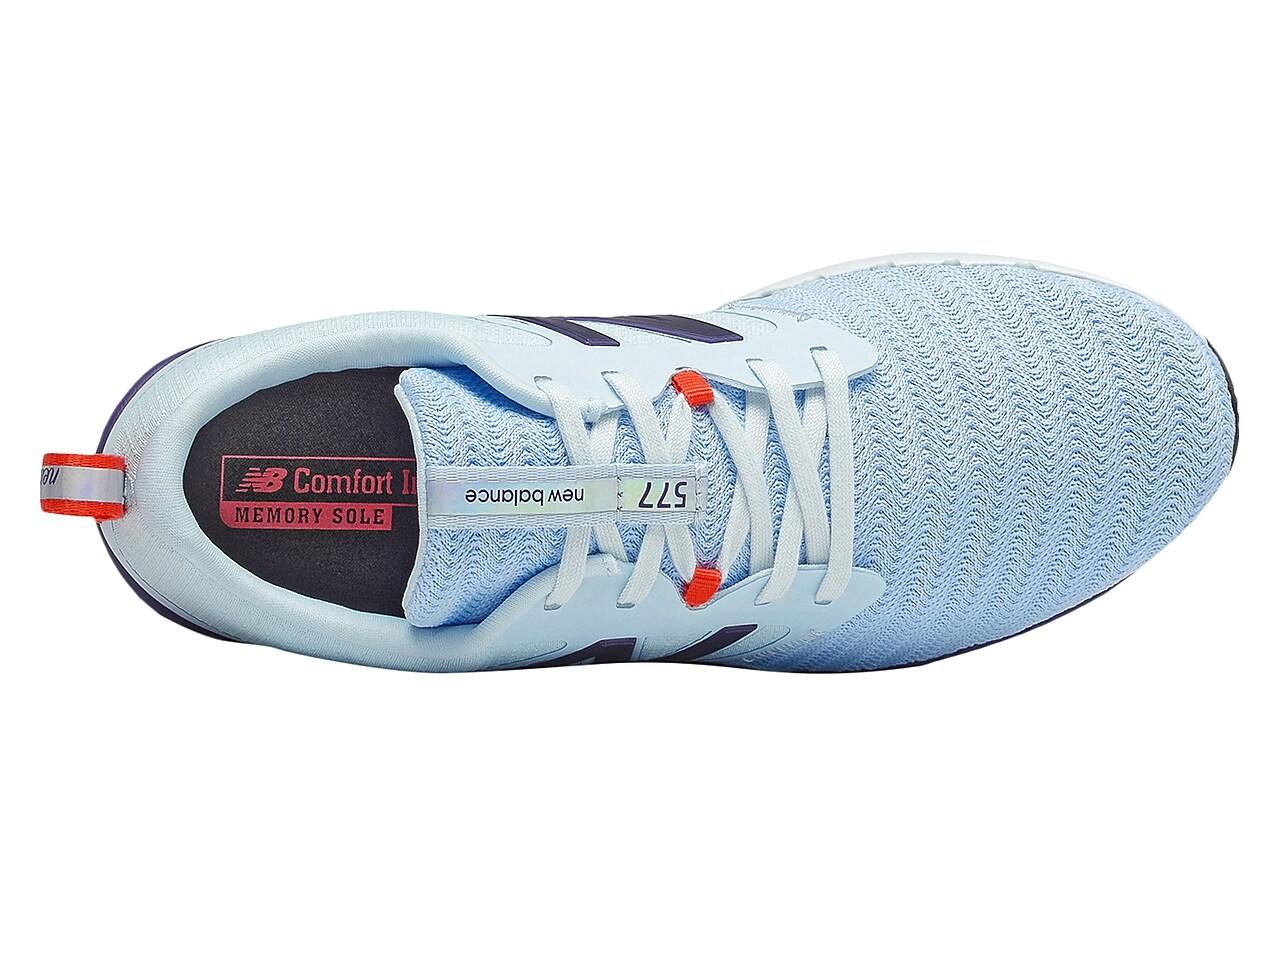 New Balance 577 Training Shoe in Blue | Lyst